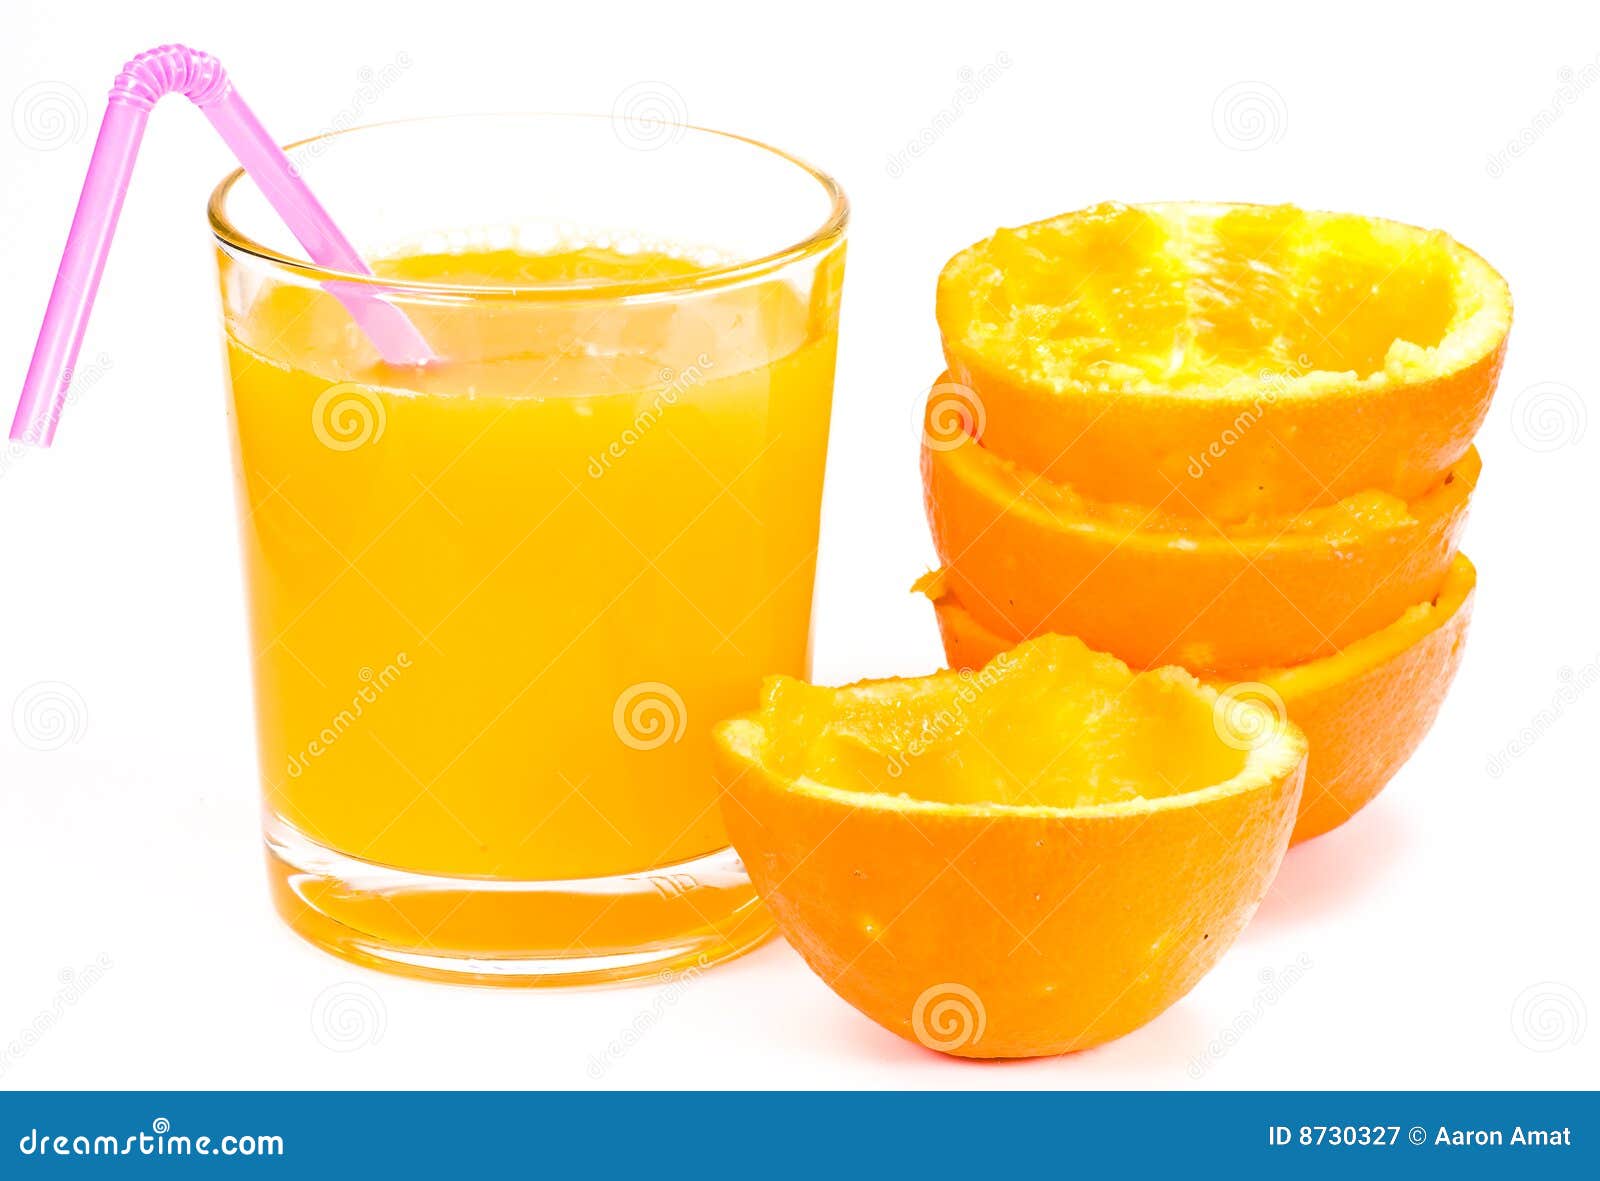 Simple Make Orange Juice Step By Step Typical Of Sawahlunto City